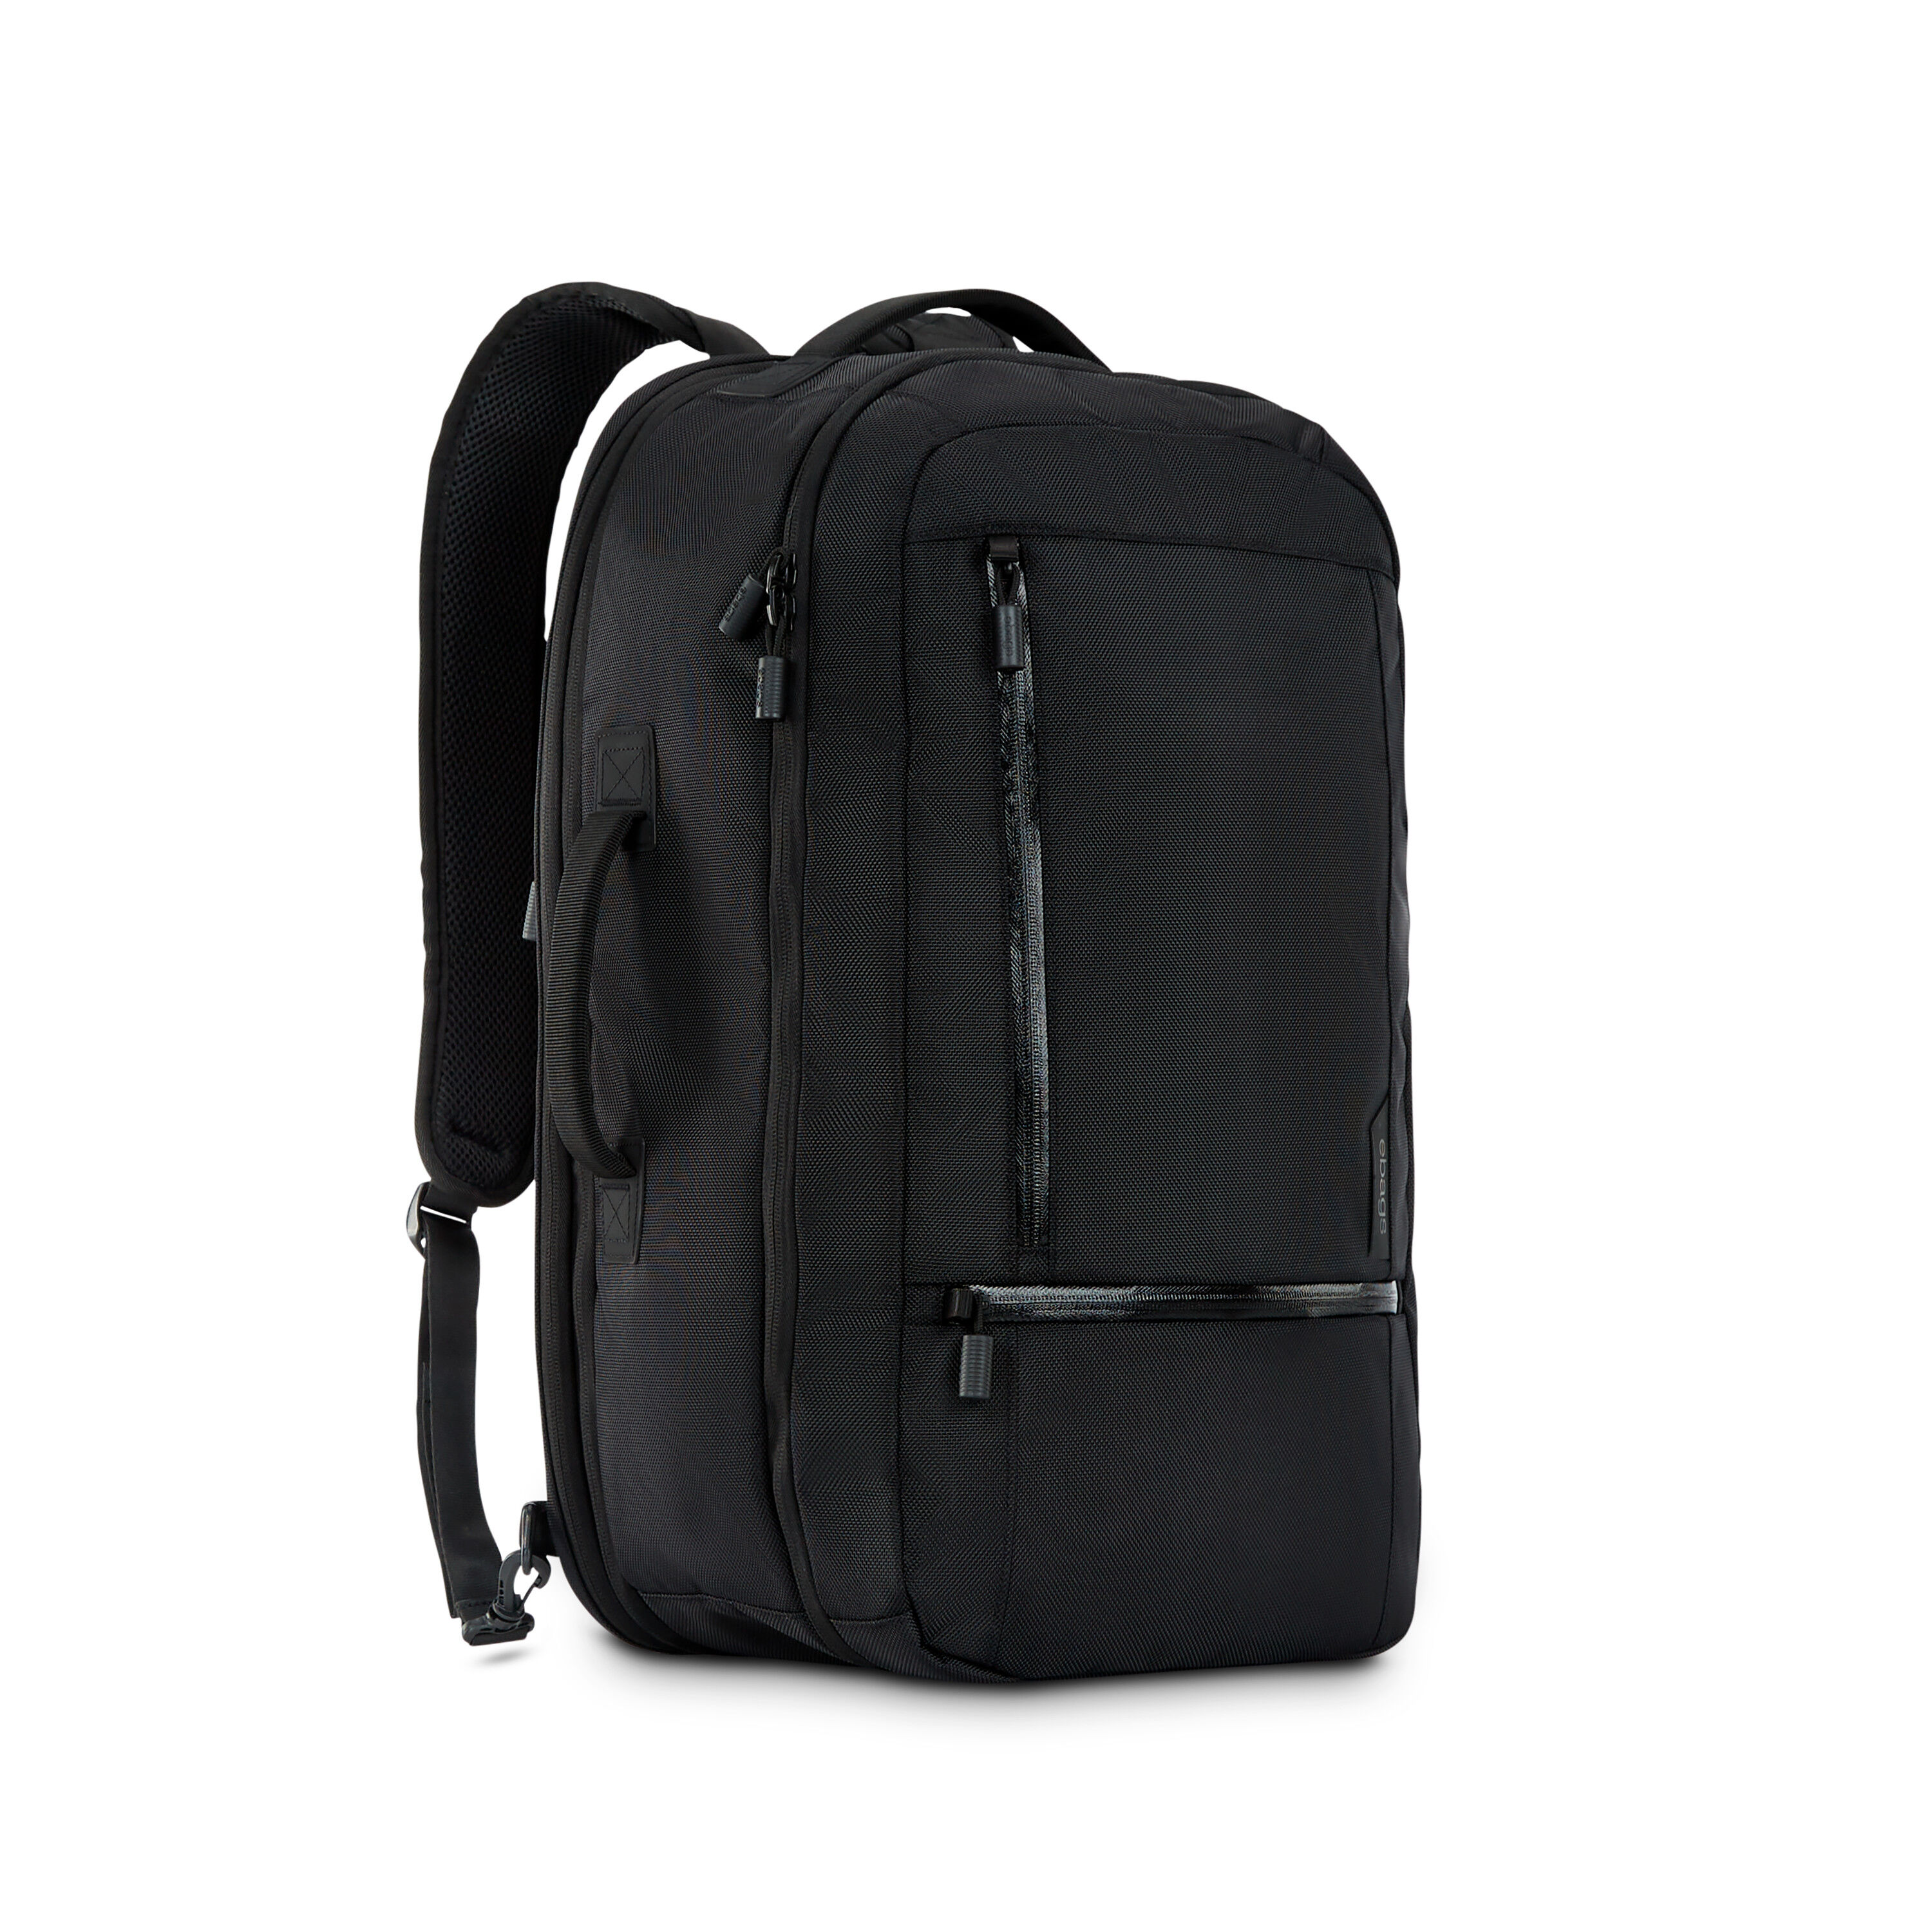 Luxon Travel Backpack | ebags Storefront Catalog | ebags